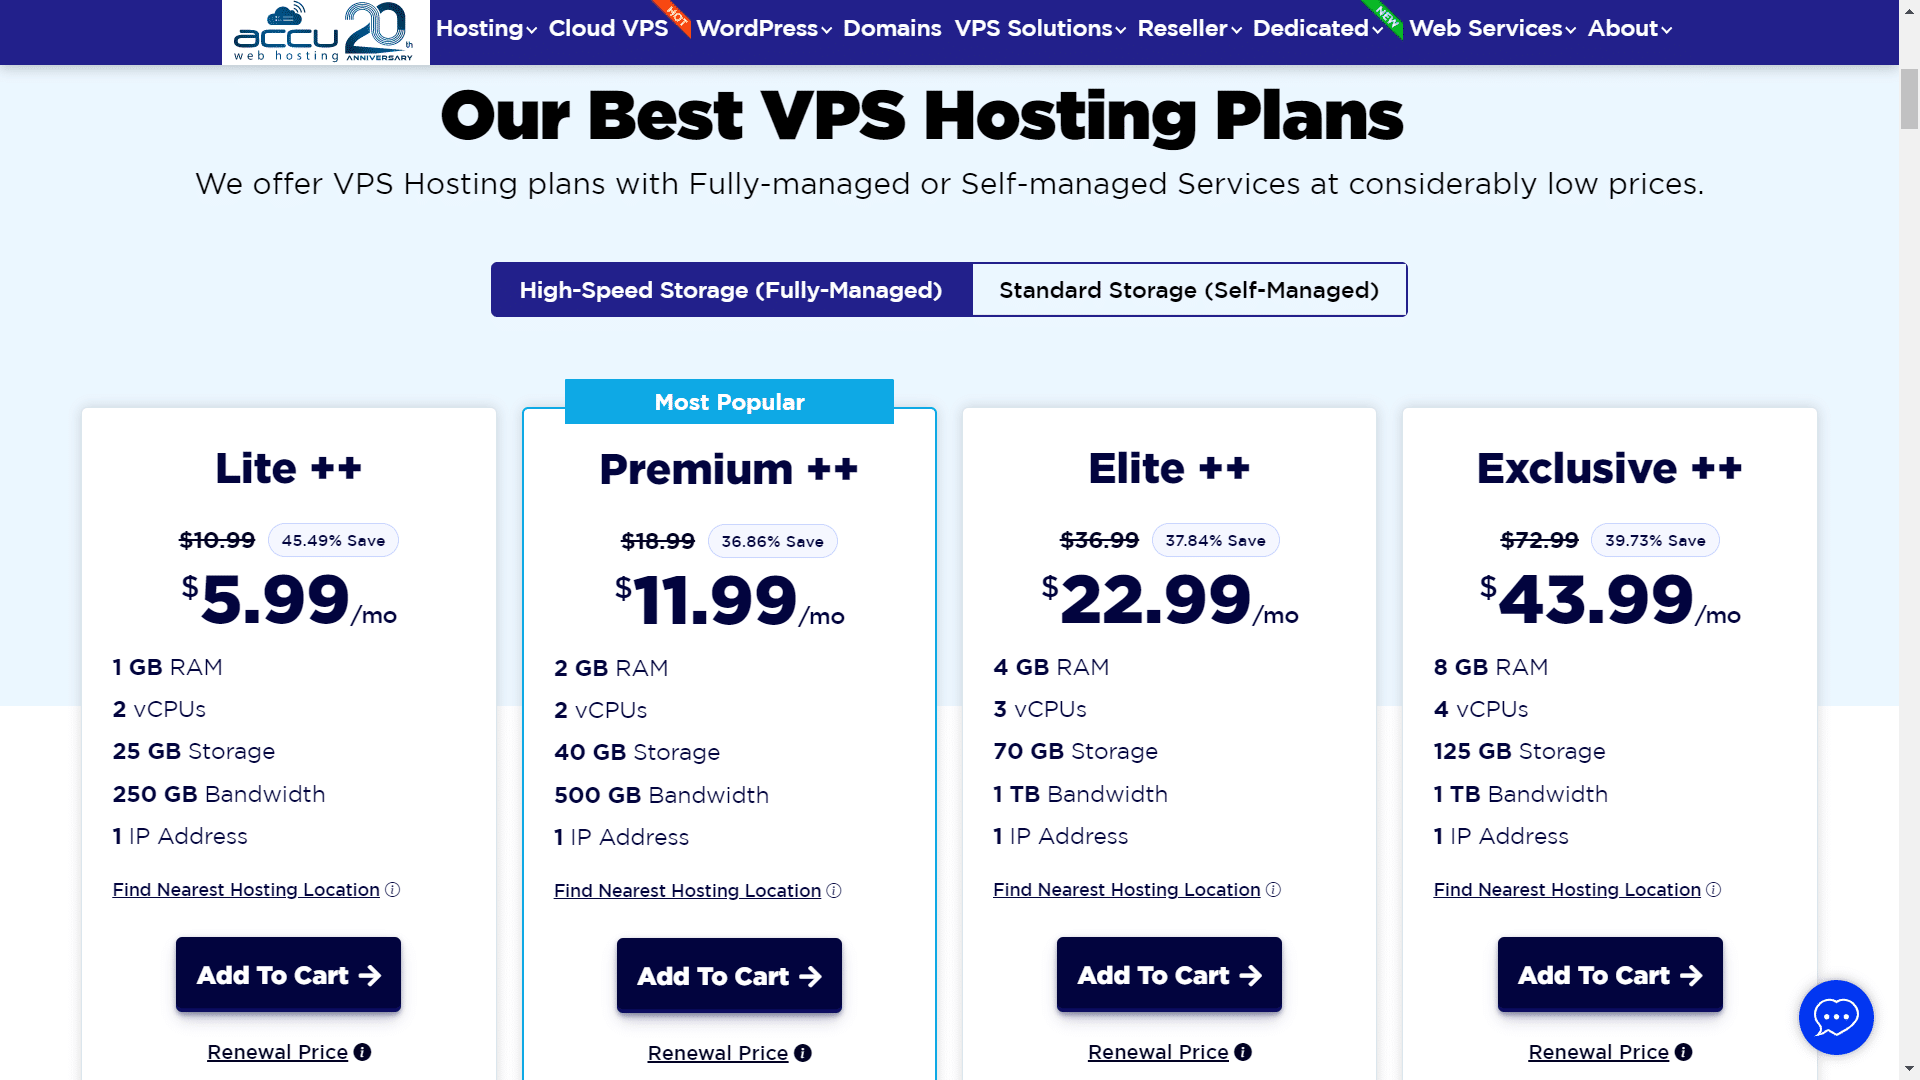 accuweb vs namecheap - accuweb vps hosting pricing